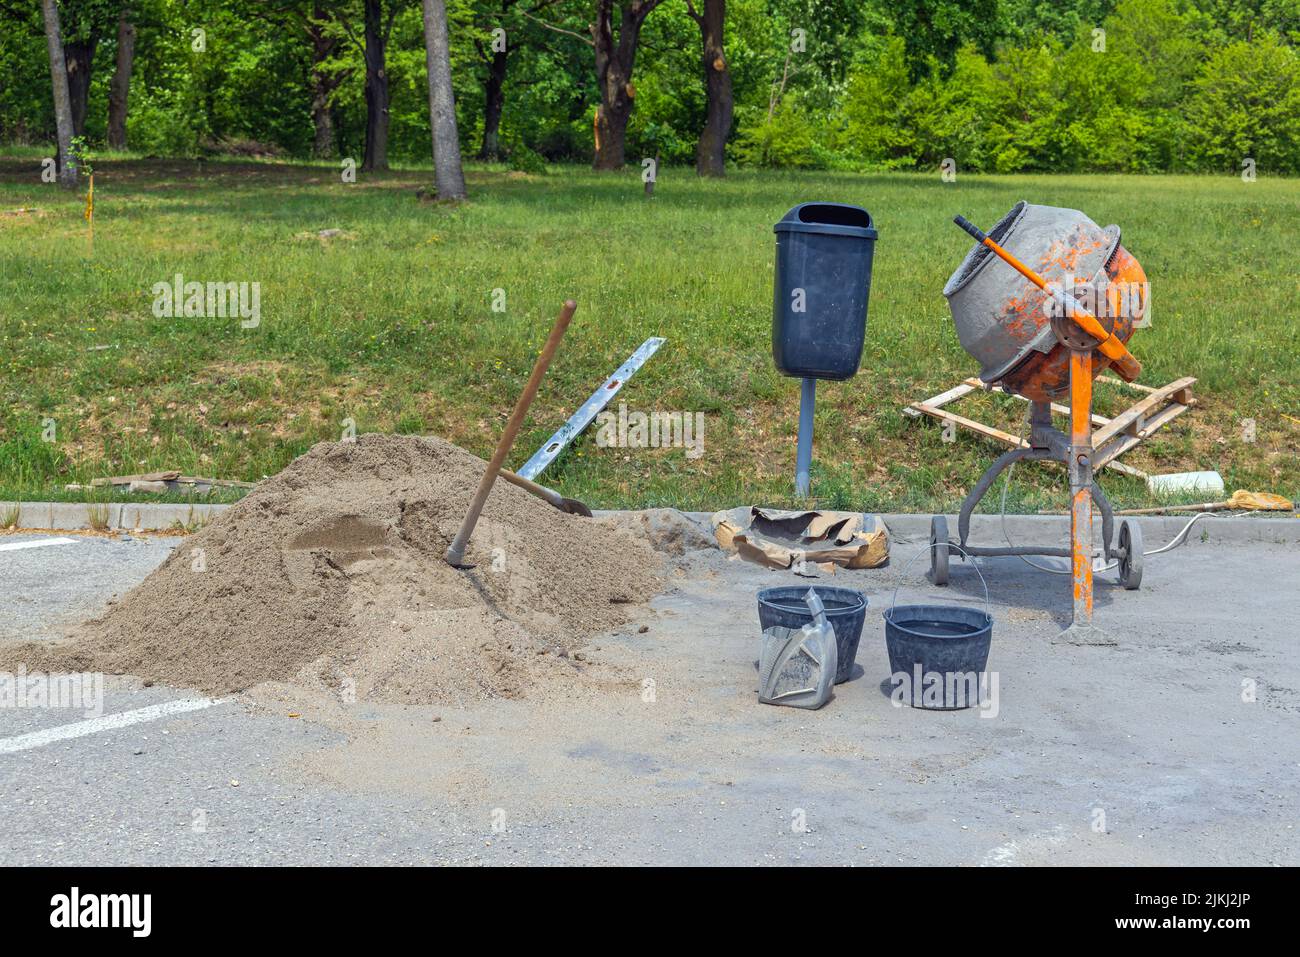 Concrete Cement Mixer Machine Equipment Construction Site in Park Stock Photo